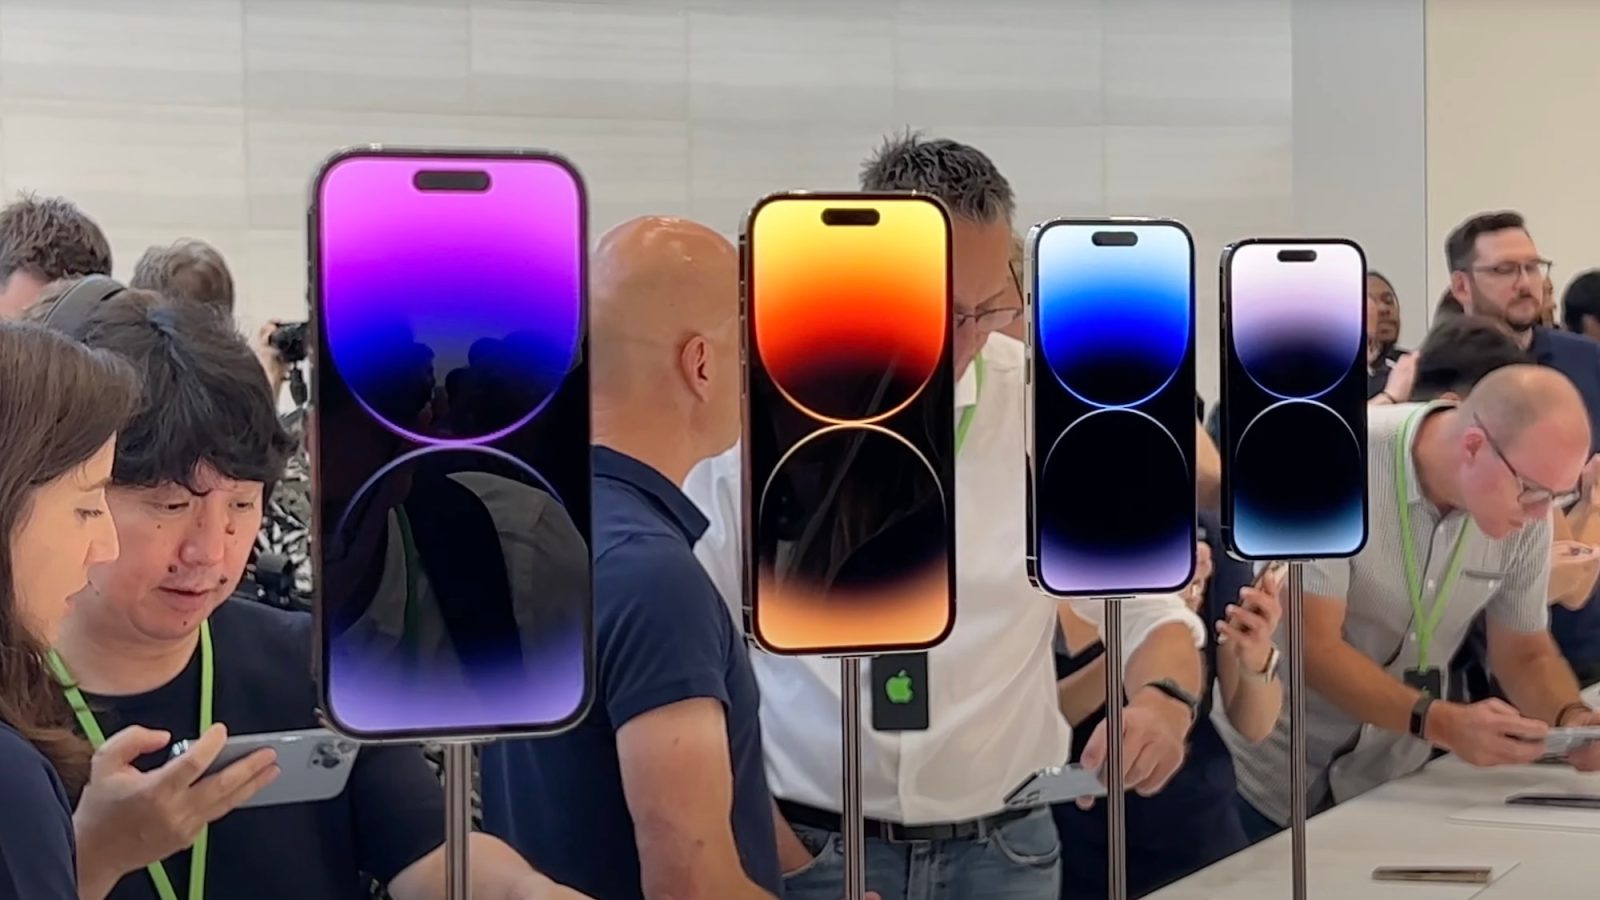 iphone 11 purple vs. iphone 14 purple color comparison? : r/iphone